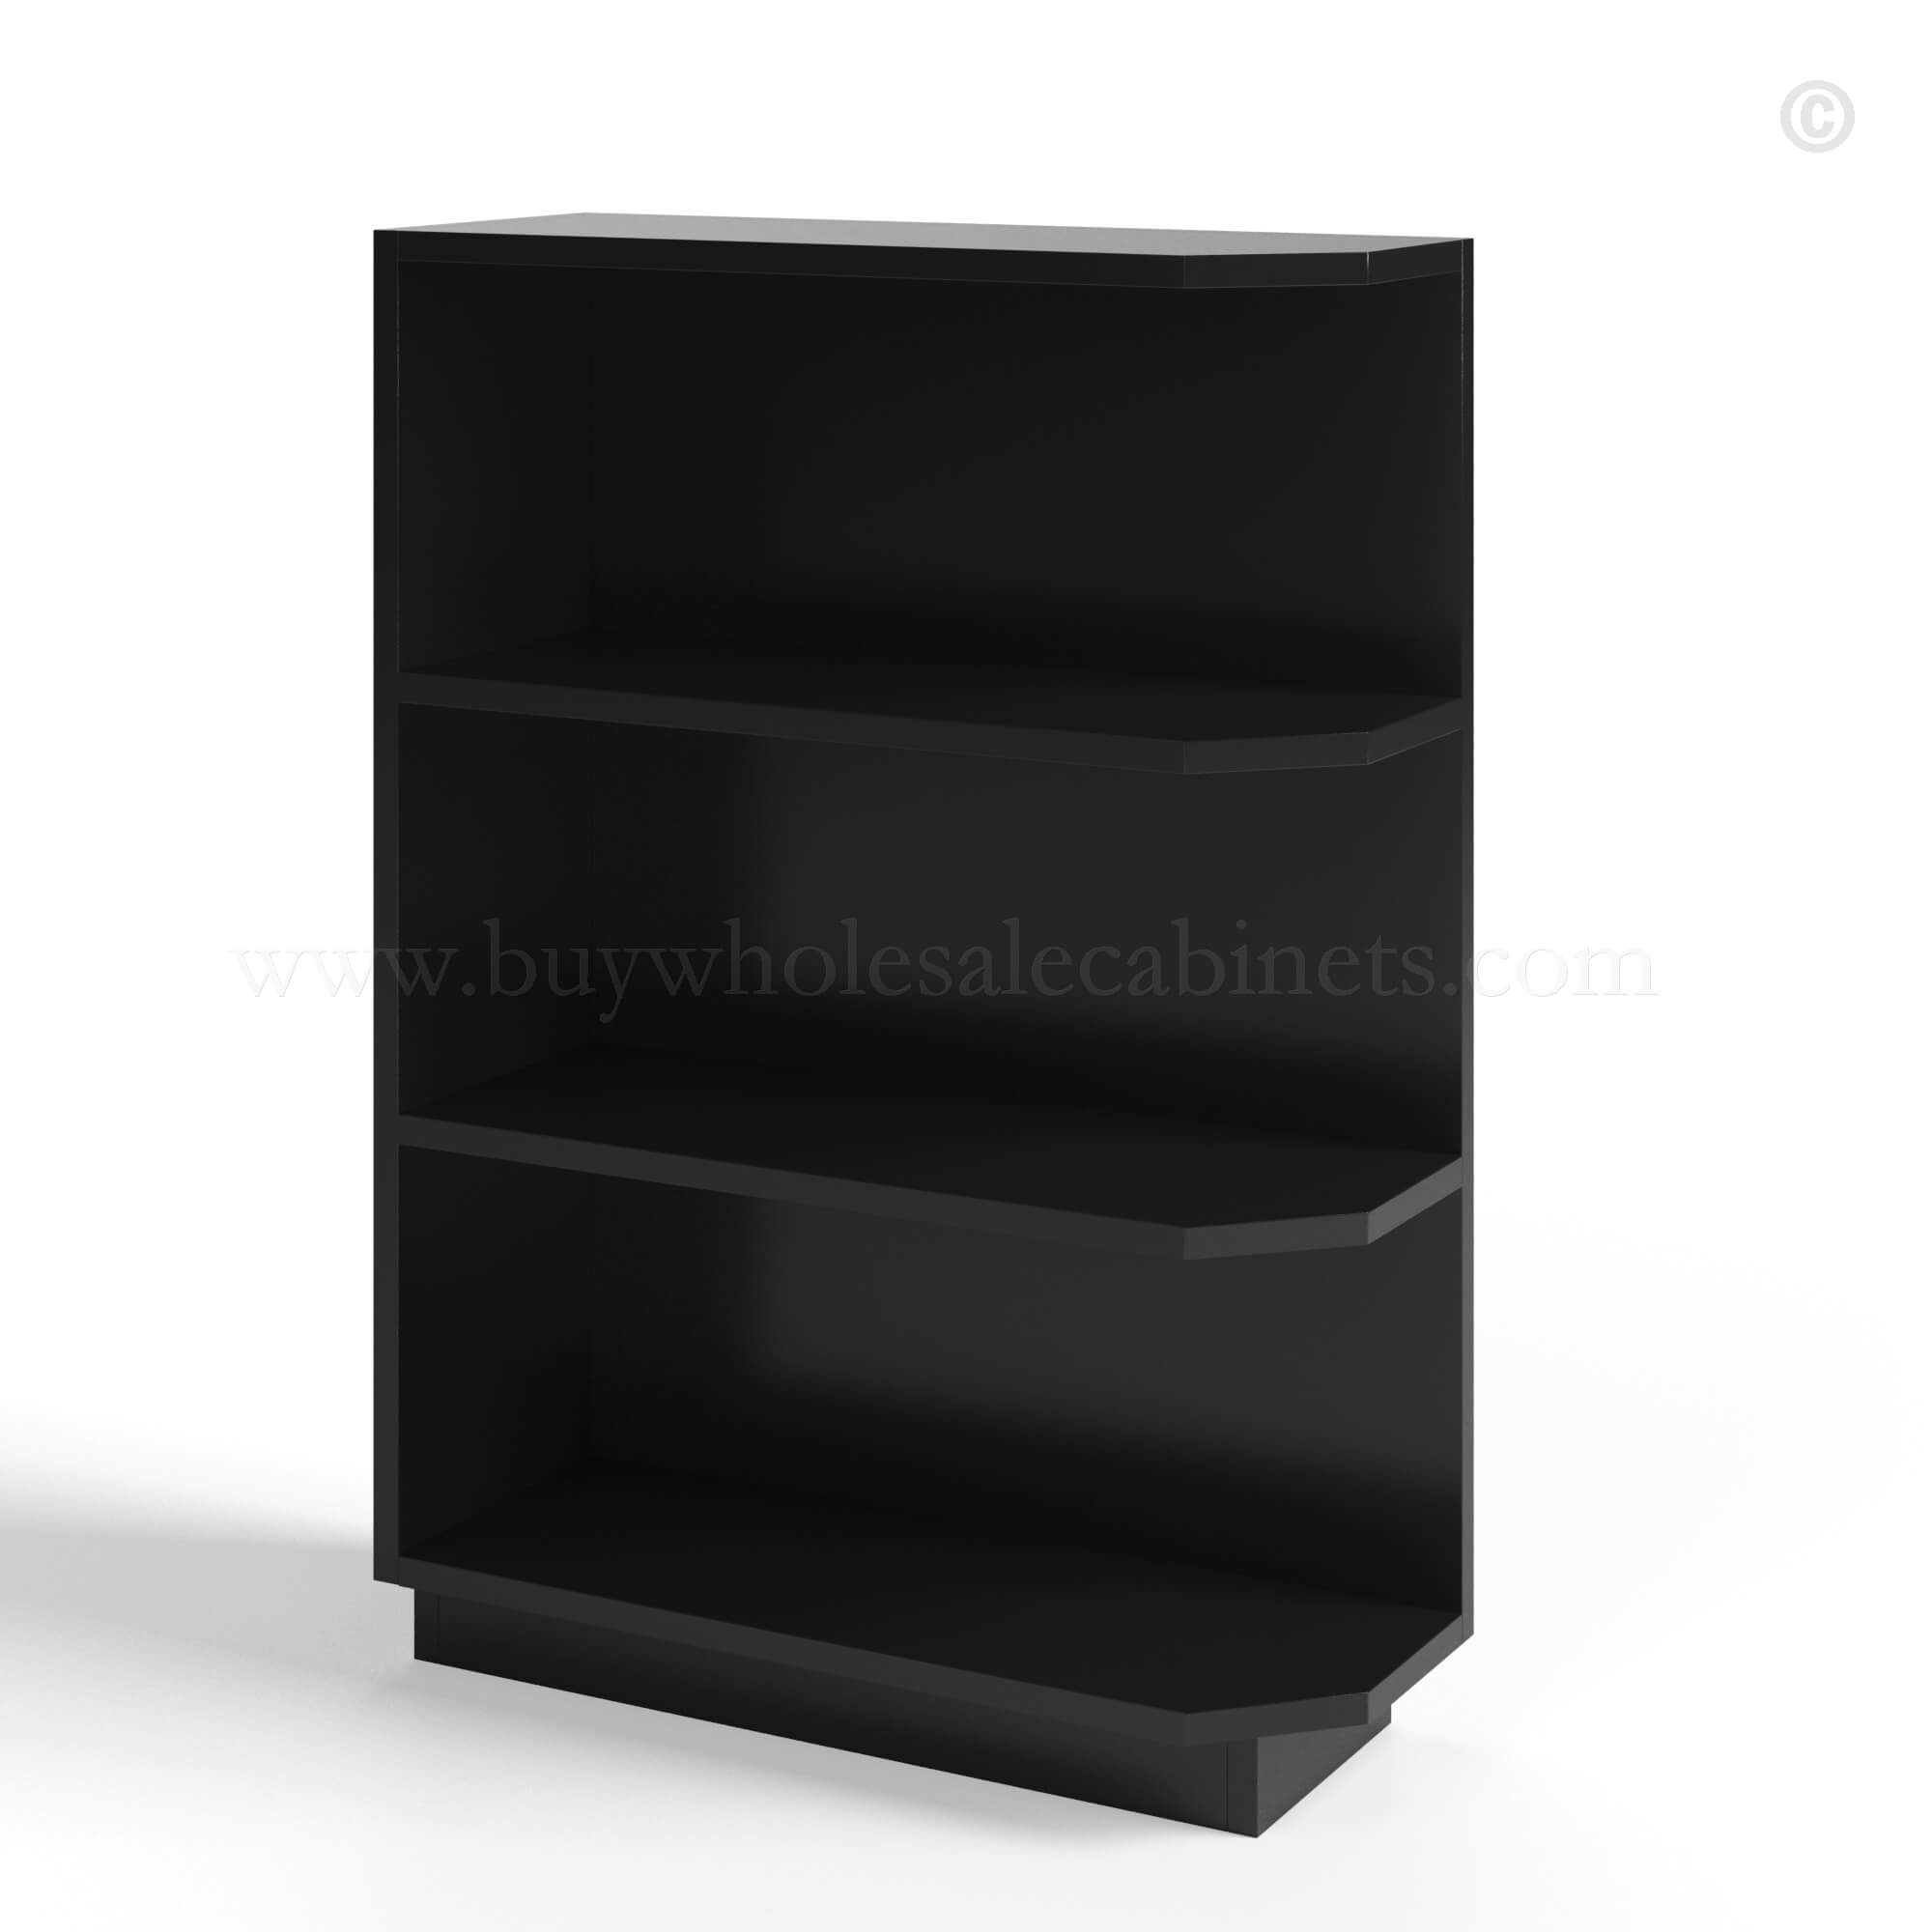 Black Shaker Base End Shelf Cabinet, rta cabinets, wholesale cabinets